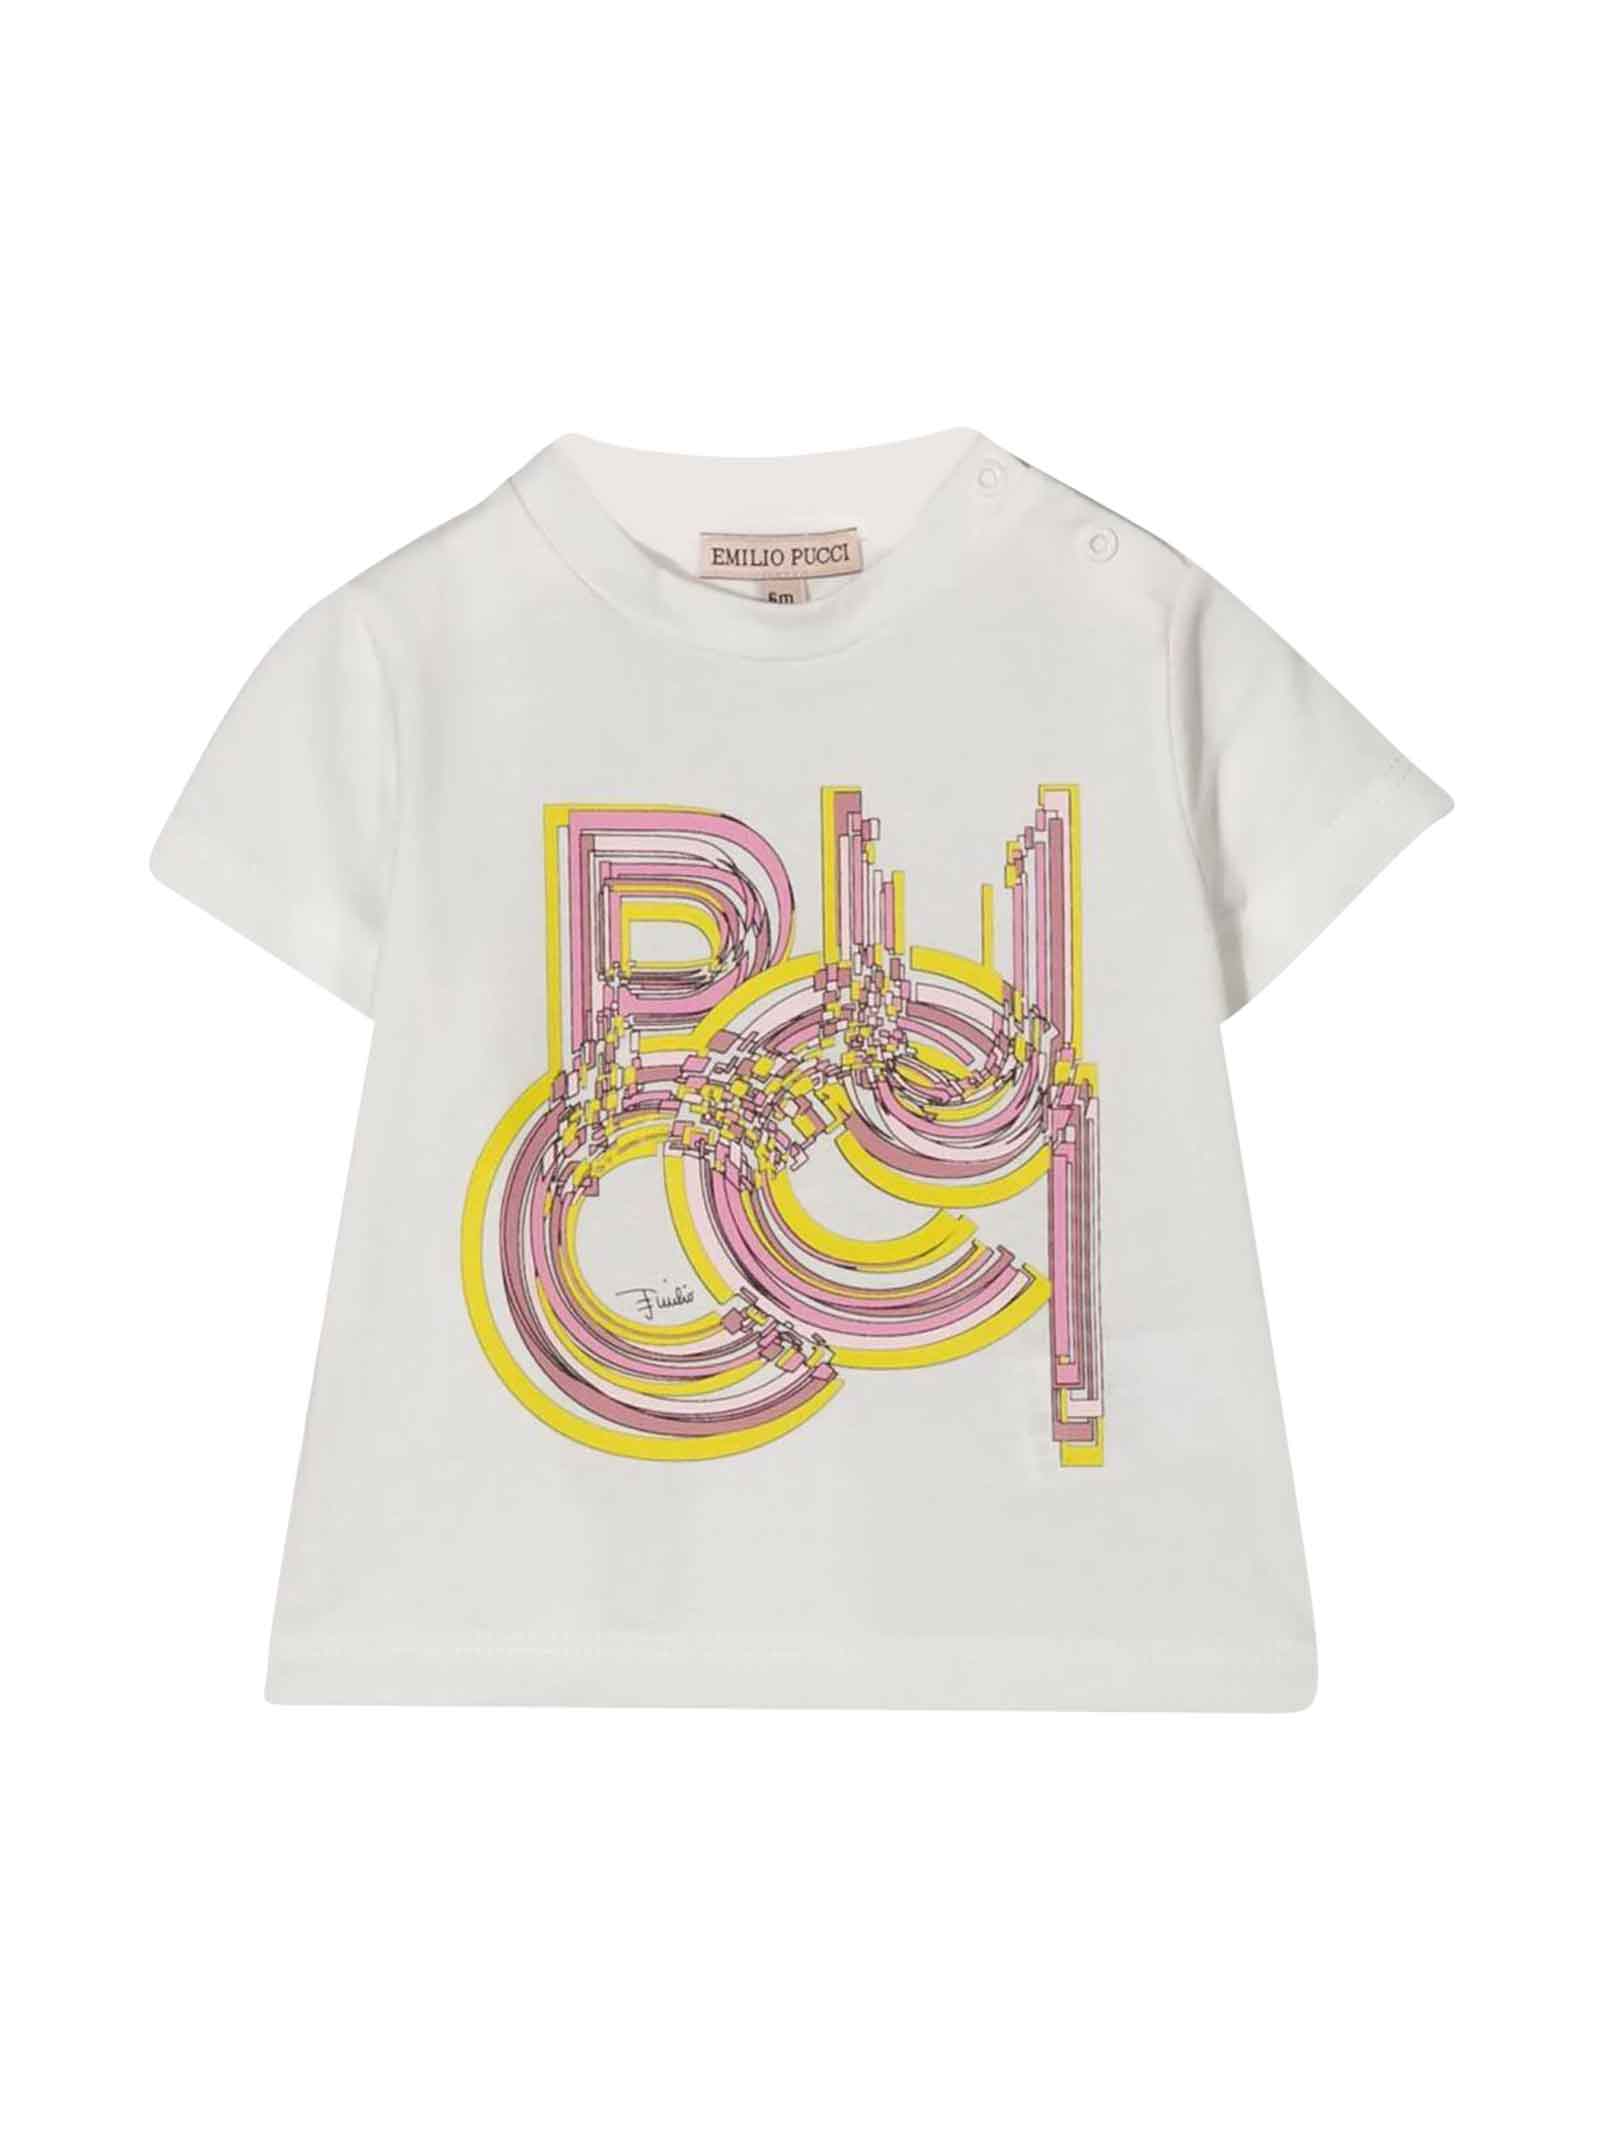 Emilio Pucci White T-shirt Baby Girl